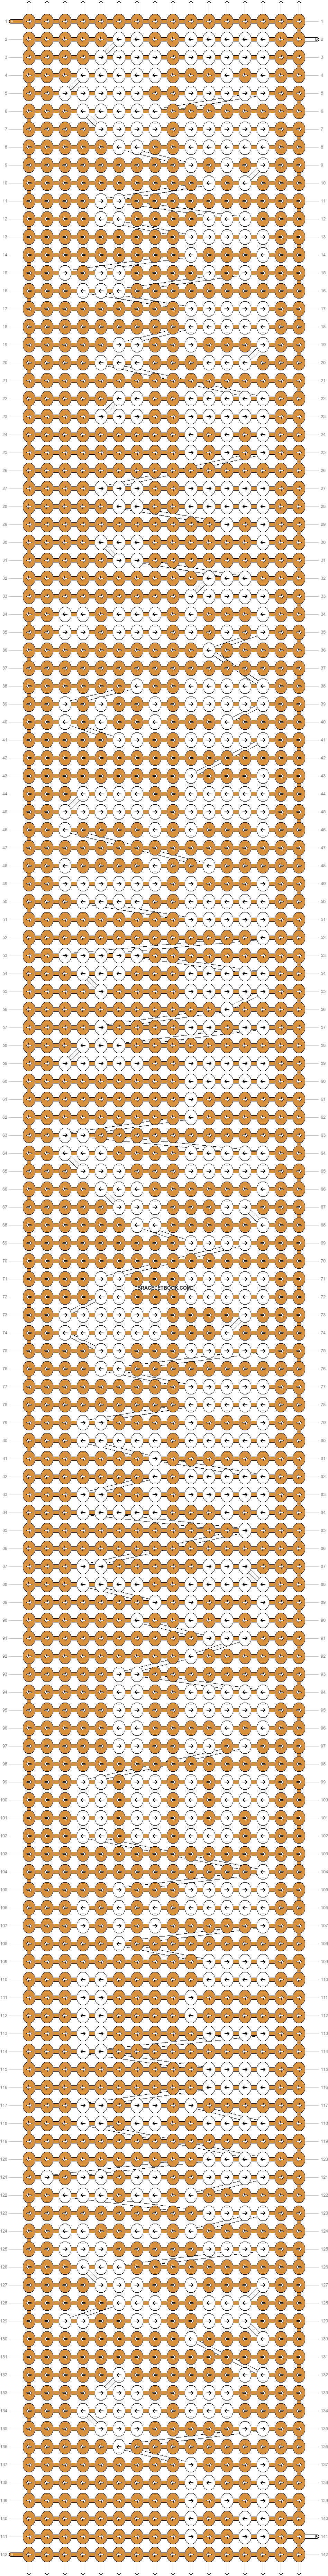 Alpha pattern #59423 variation #105324 pattern